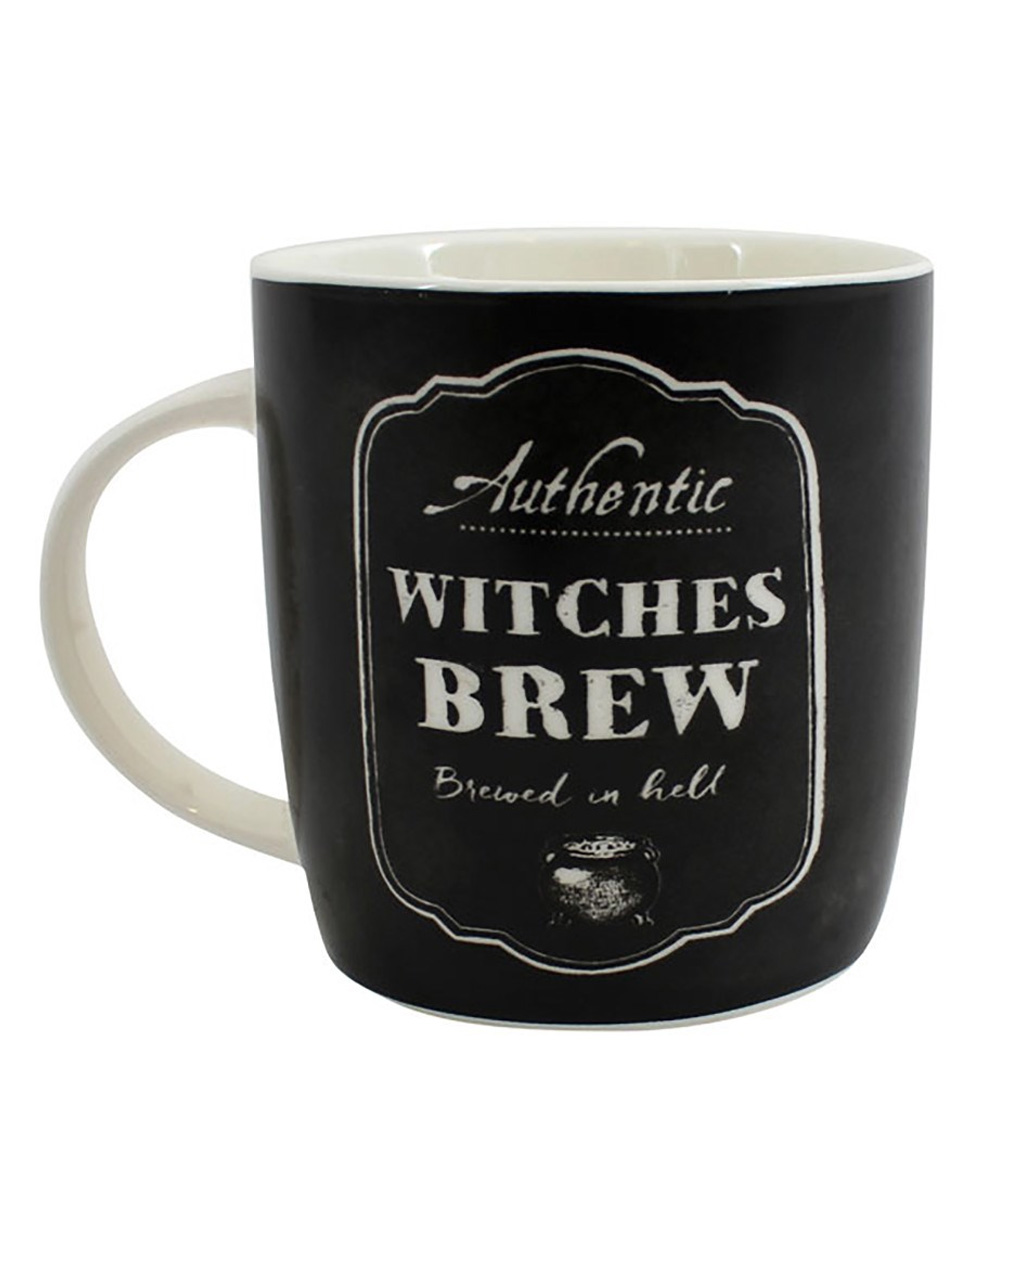 Witches brew travel mug